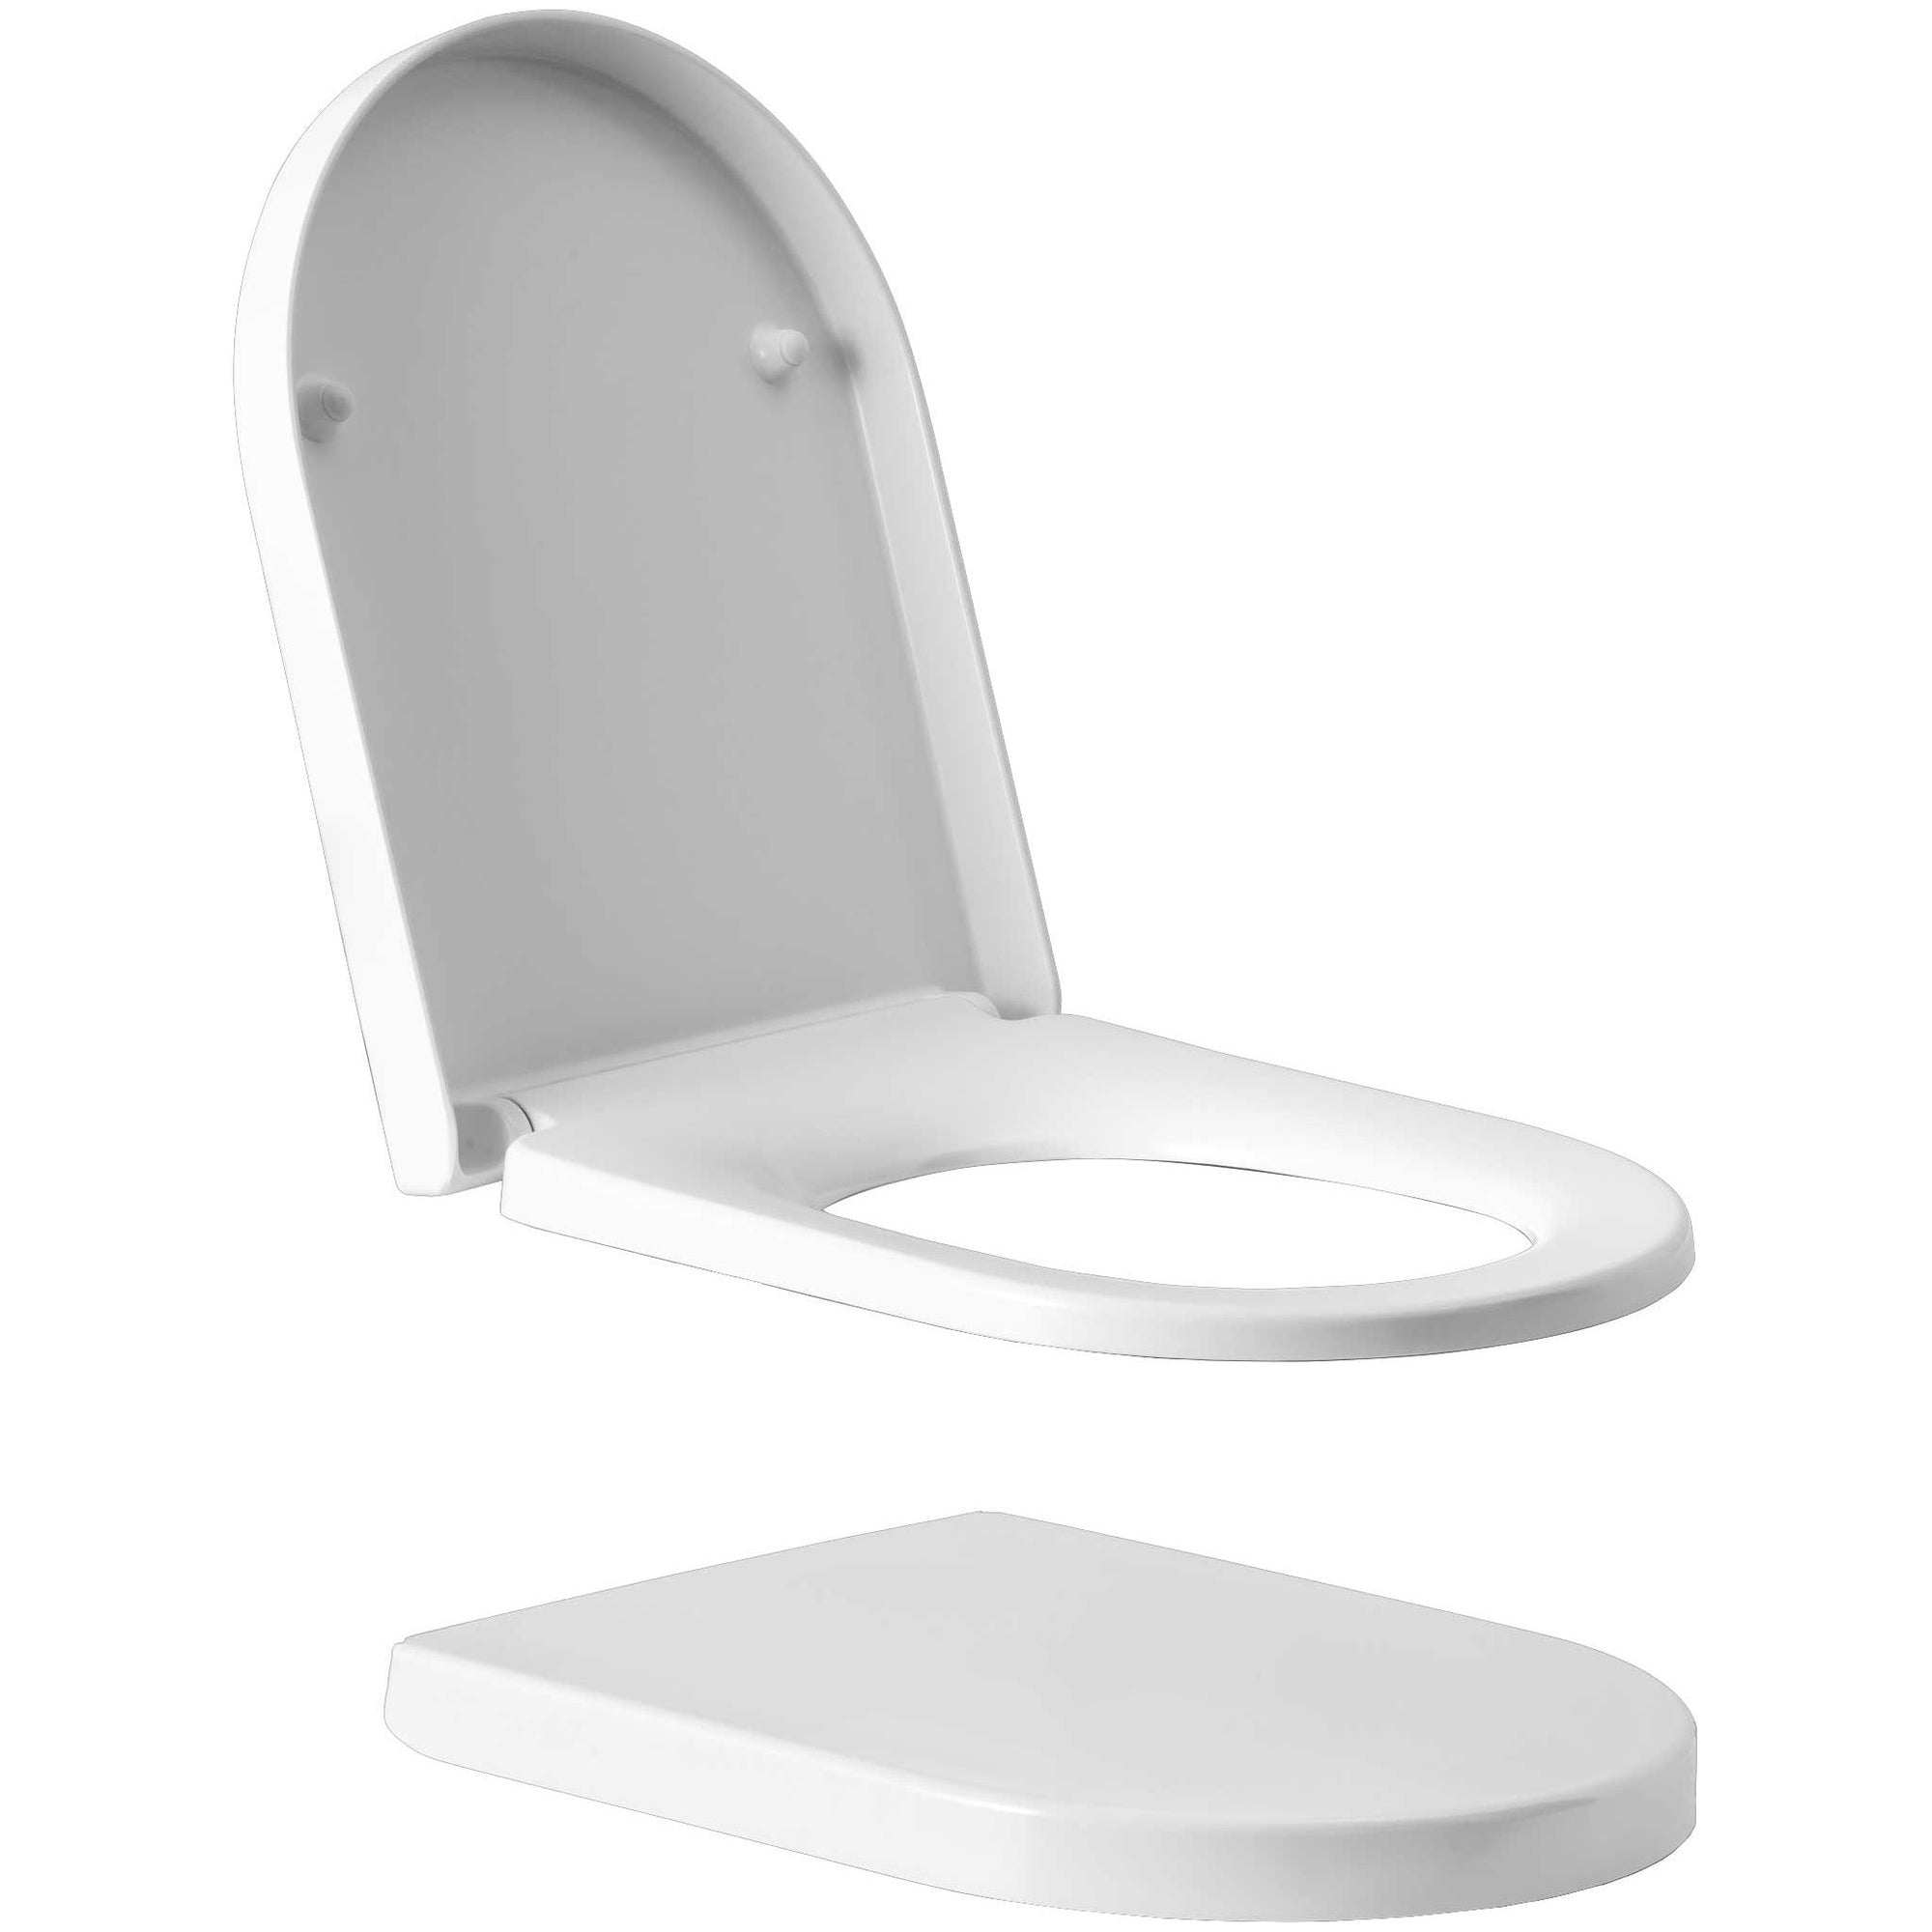 Deluxe Toilet Seat